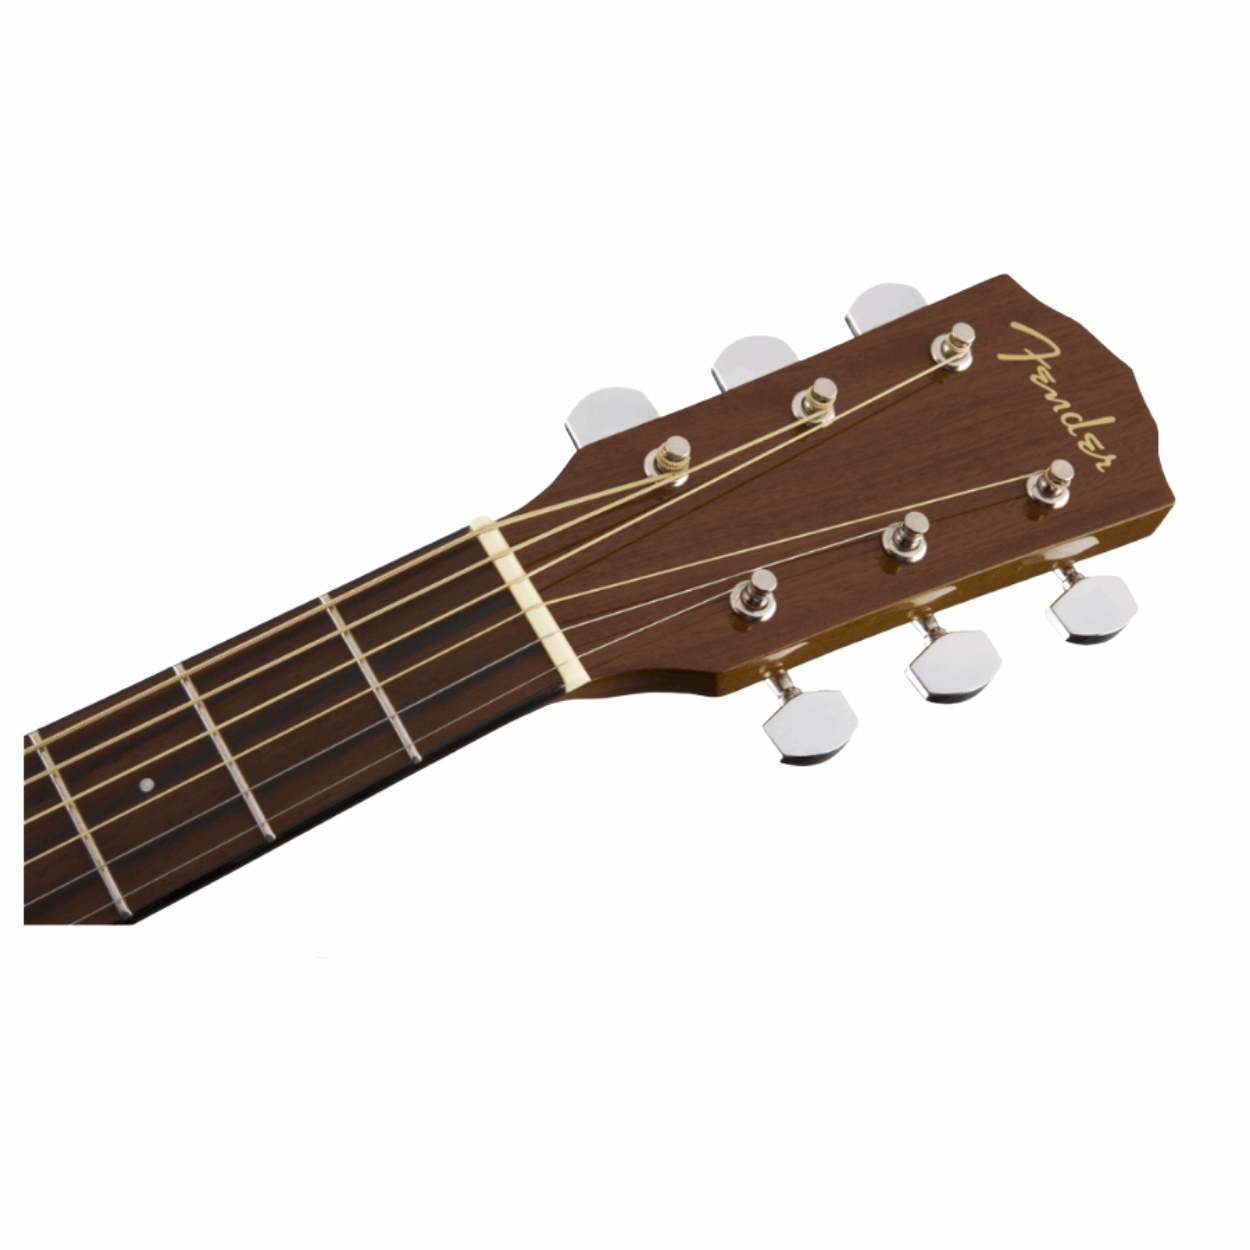 Fender CP-60S Parlor Acoustic Guitar, Walnut FB, Natural, FENDER, ACOUSTIC GUITAR, fender-acoustic-guitar-f03-097-0120-021, ZOSO MUSIC SDN BHD